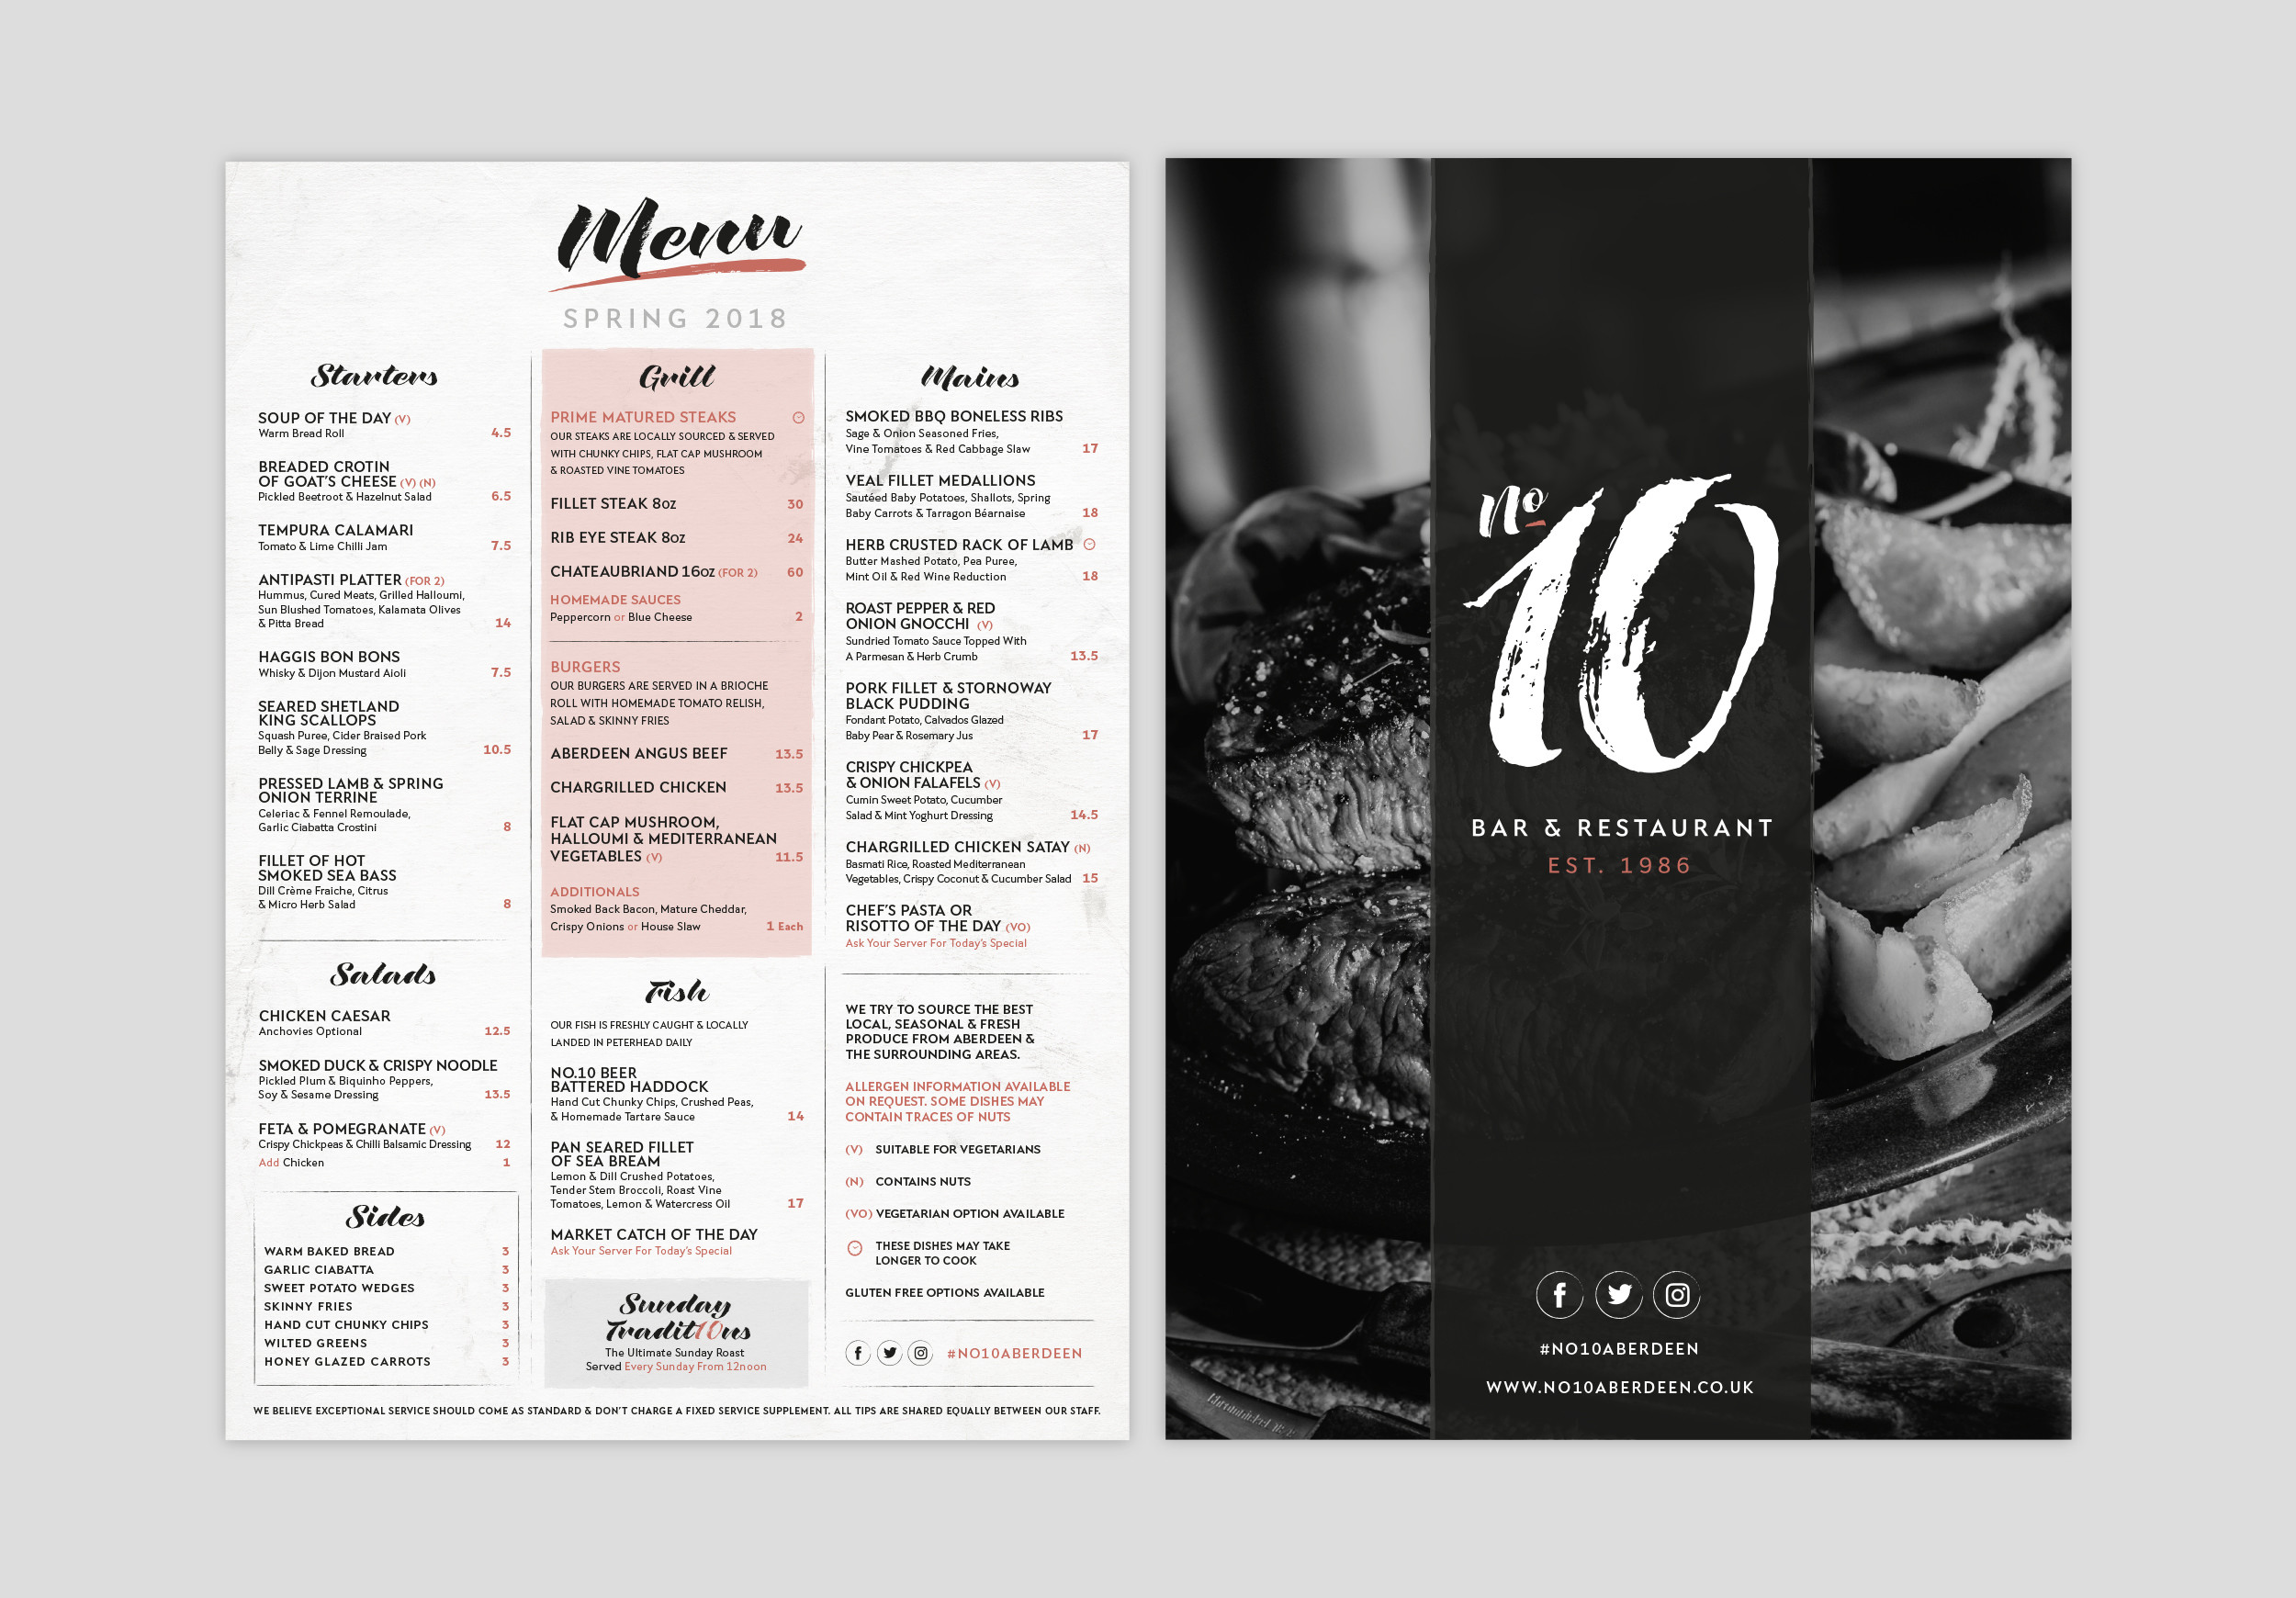 No.10 Bar & Restaurant